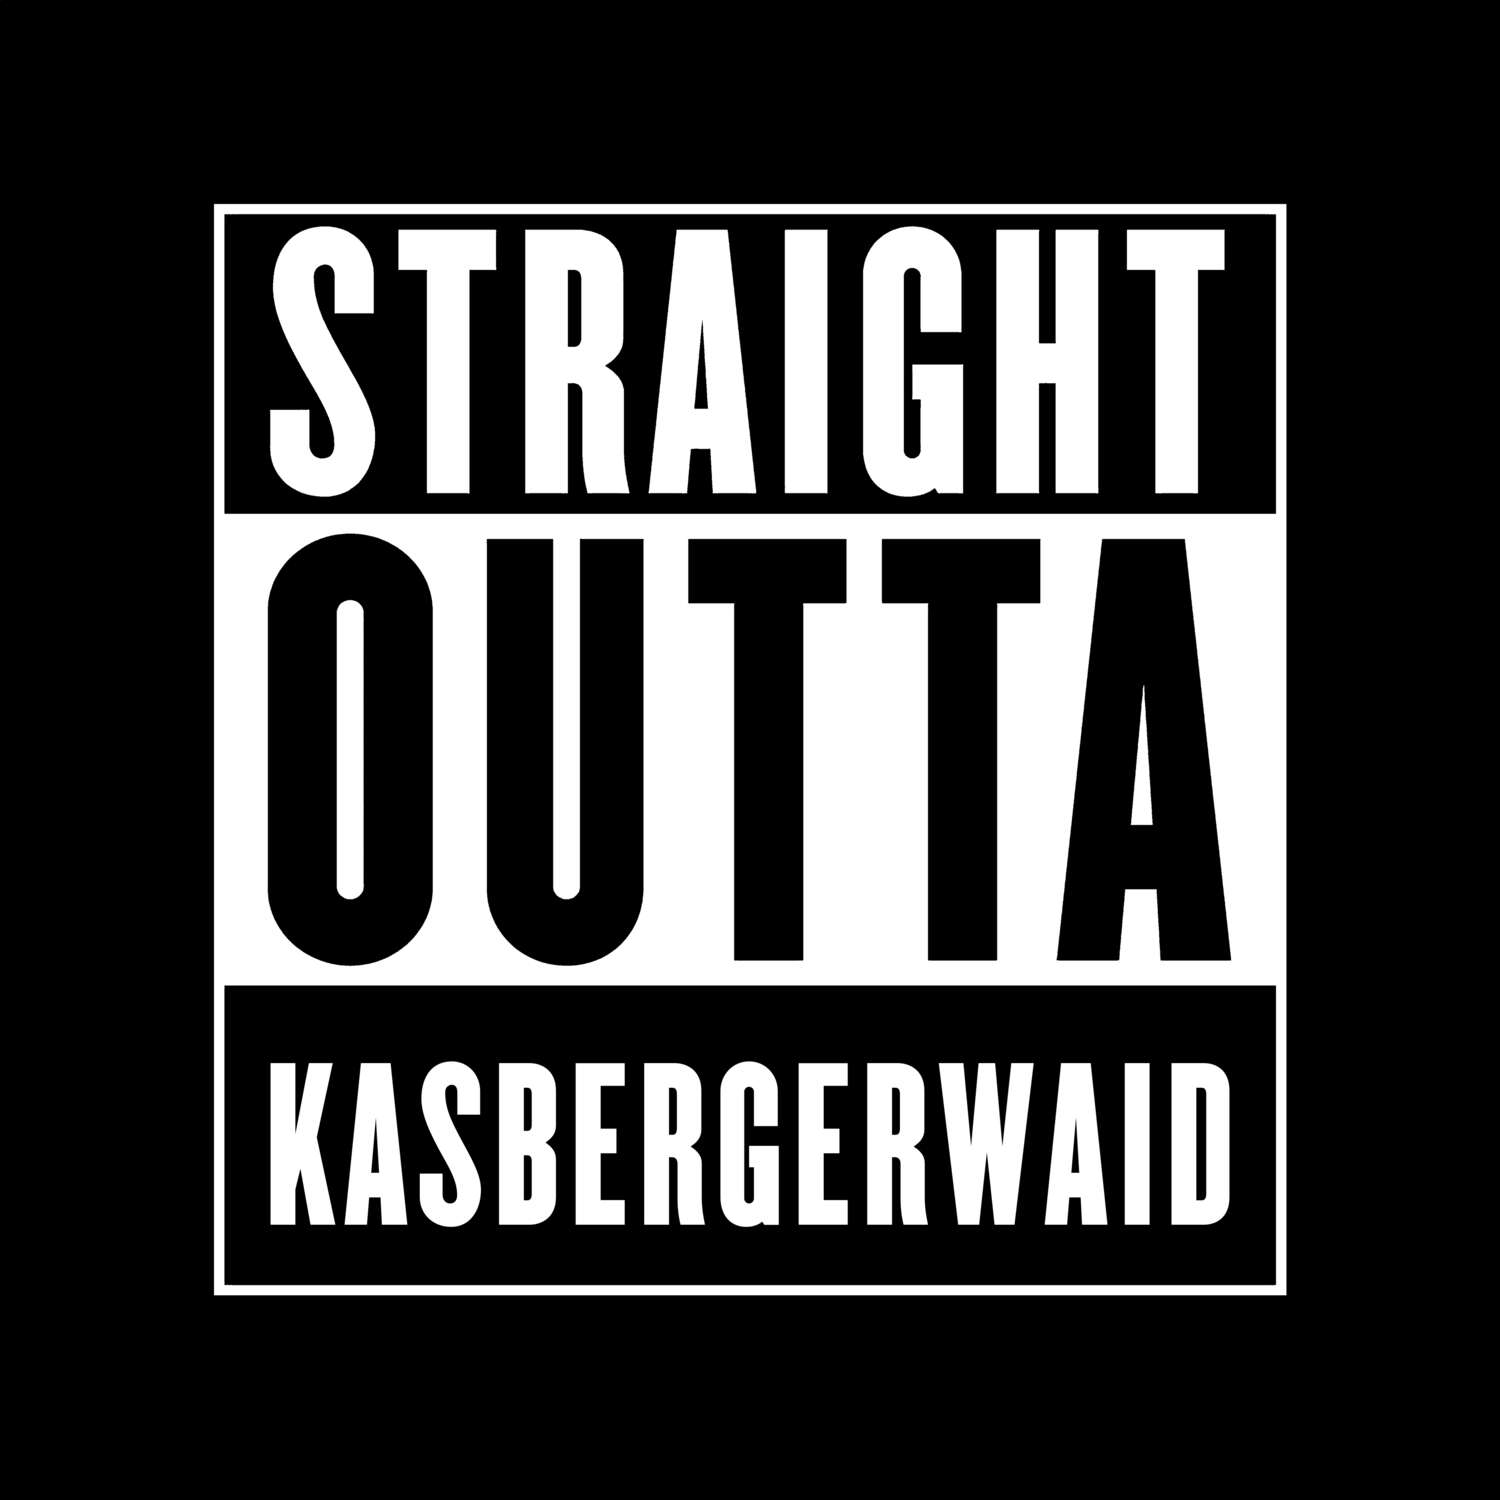 Kasbergerwaid T-Shirt »Straight Outta«